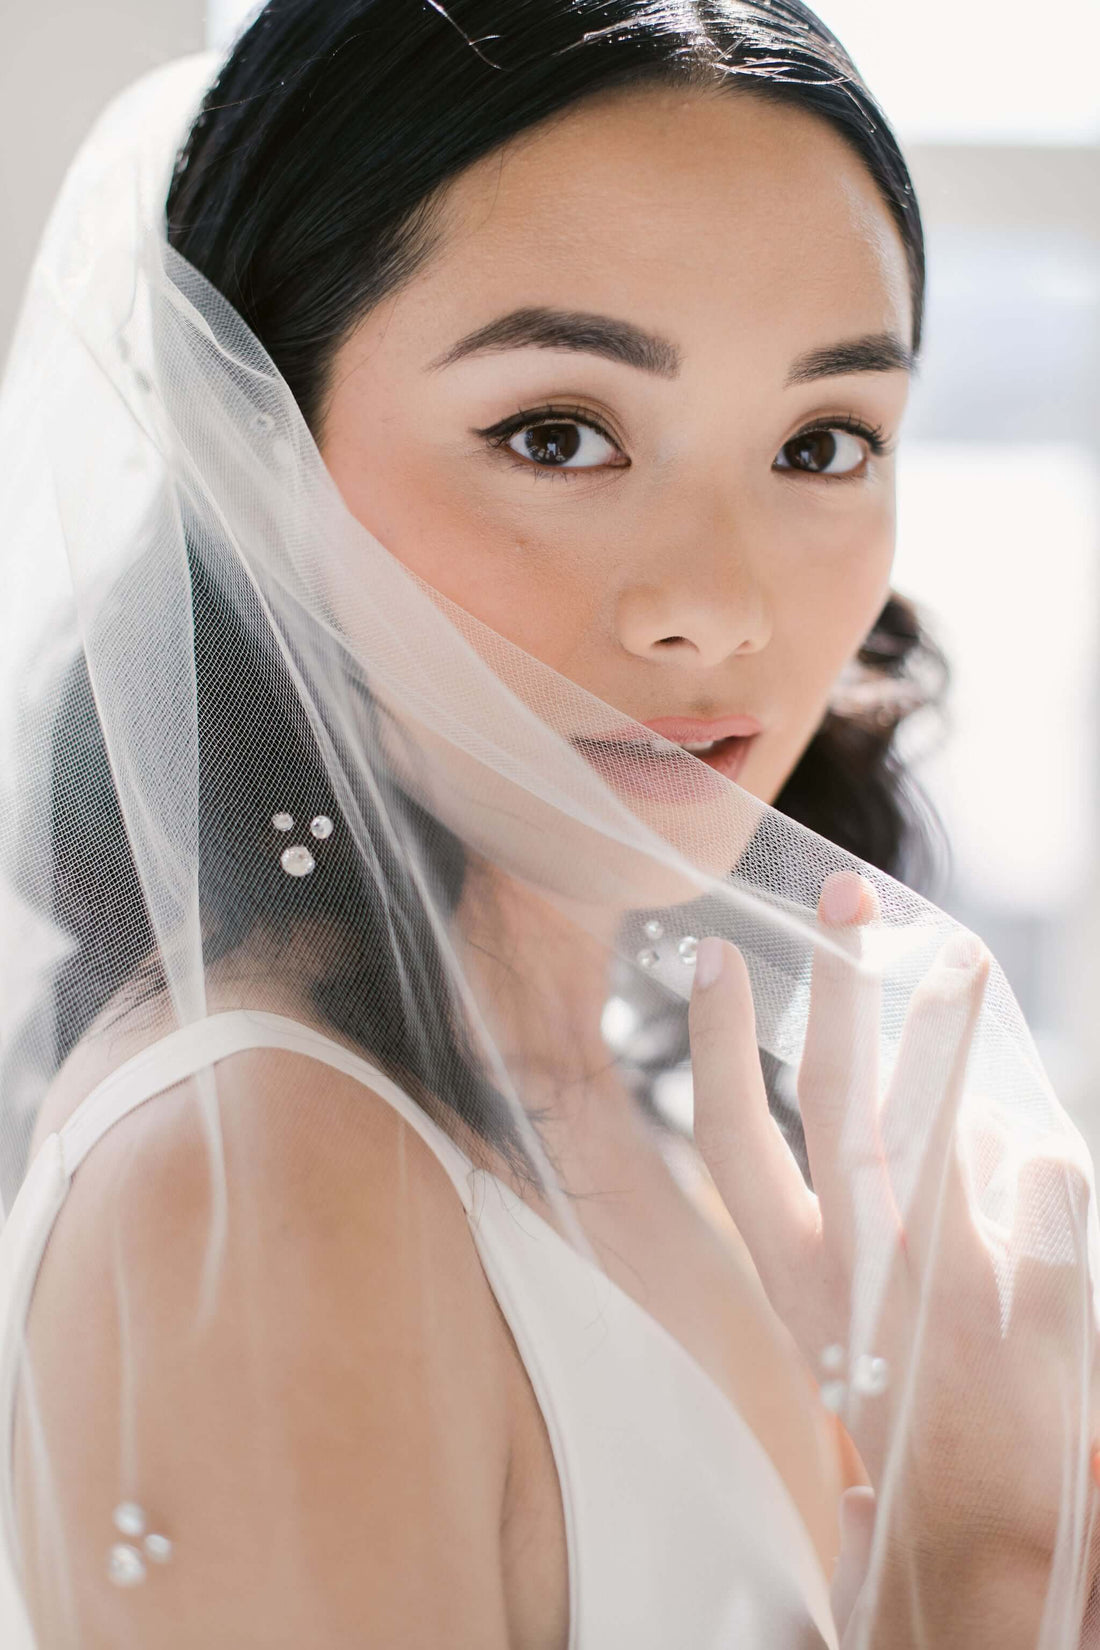 Do you take wedding photos with veil?